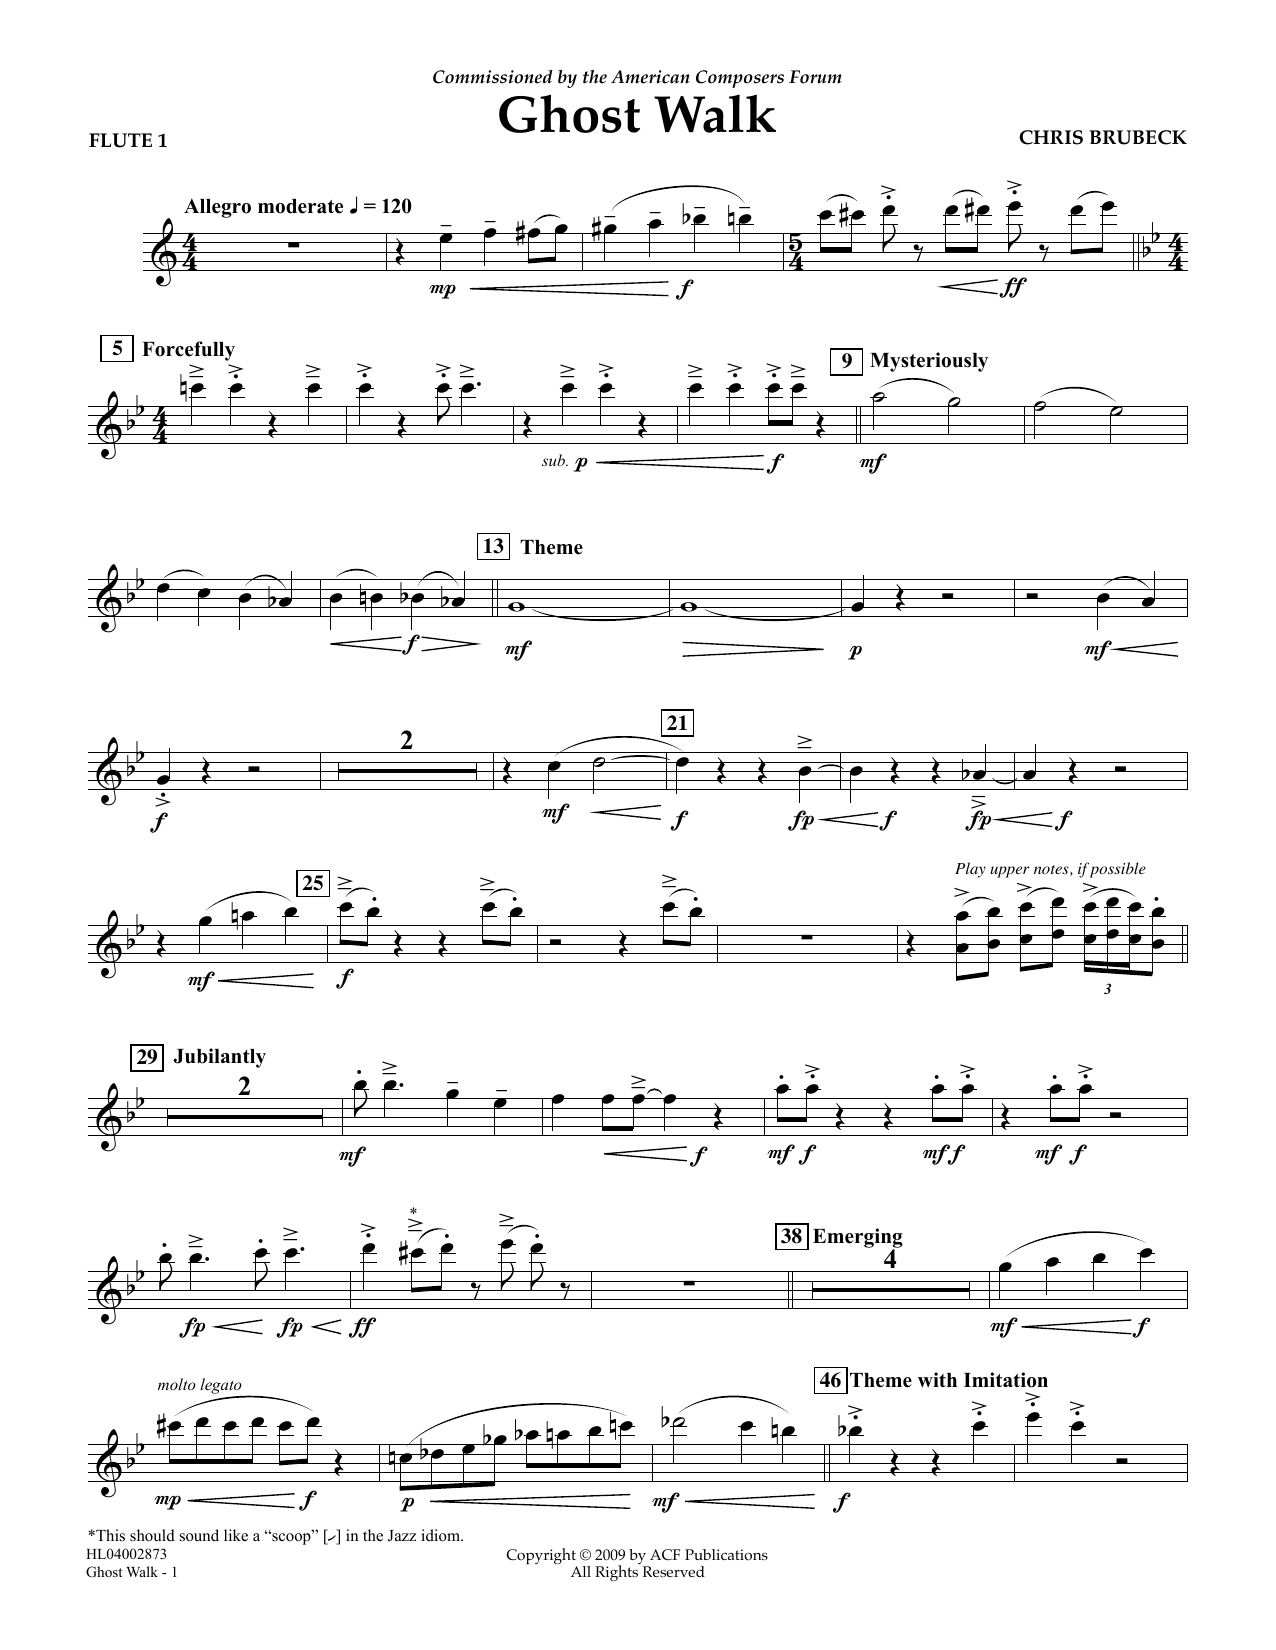 Chris Brubeck Ghost Walk - Flute 1 Sheet Music Notes & Chords for Concert Band - Download or Print PDF